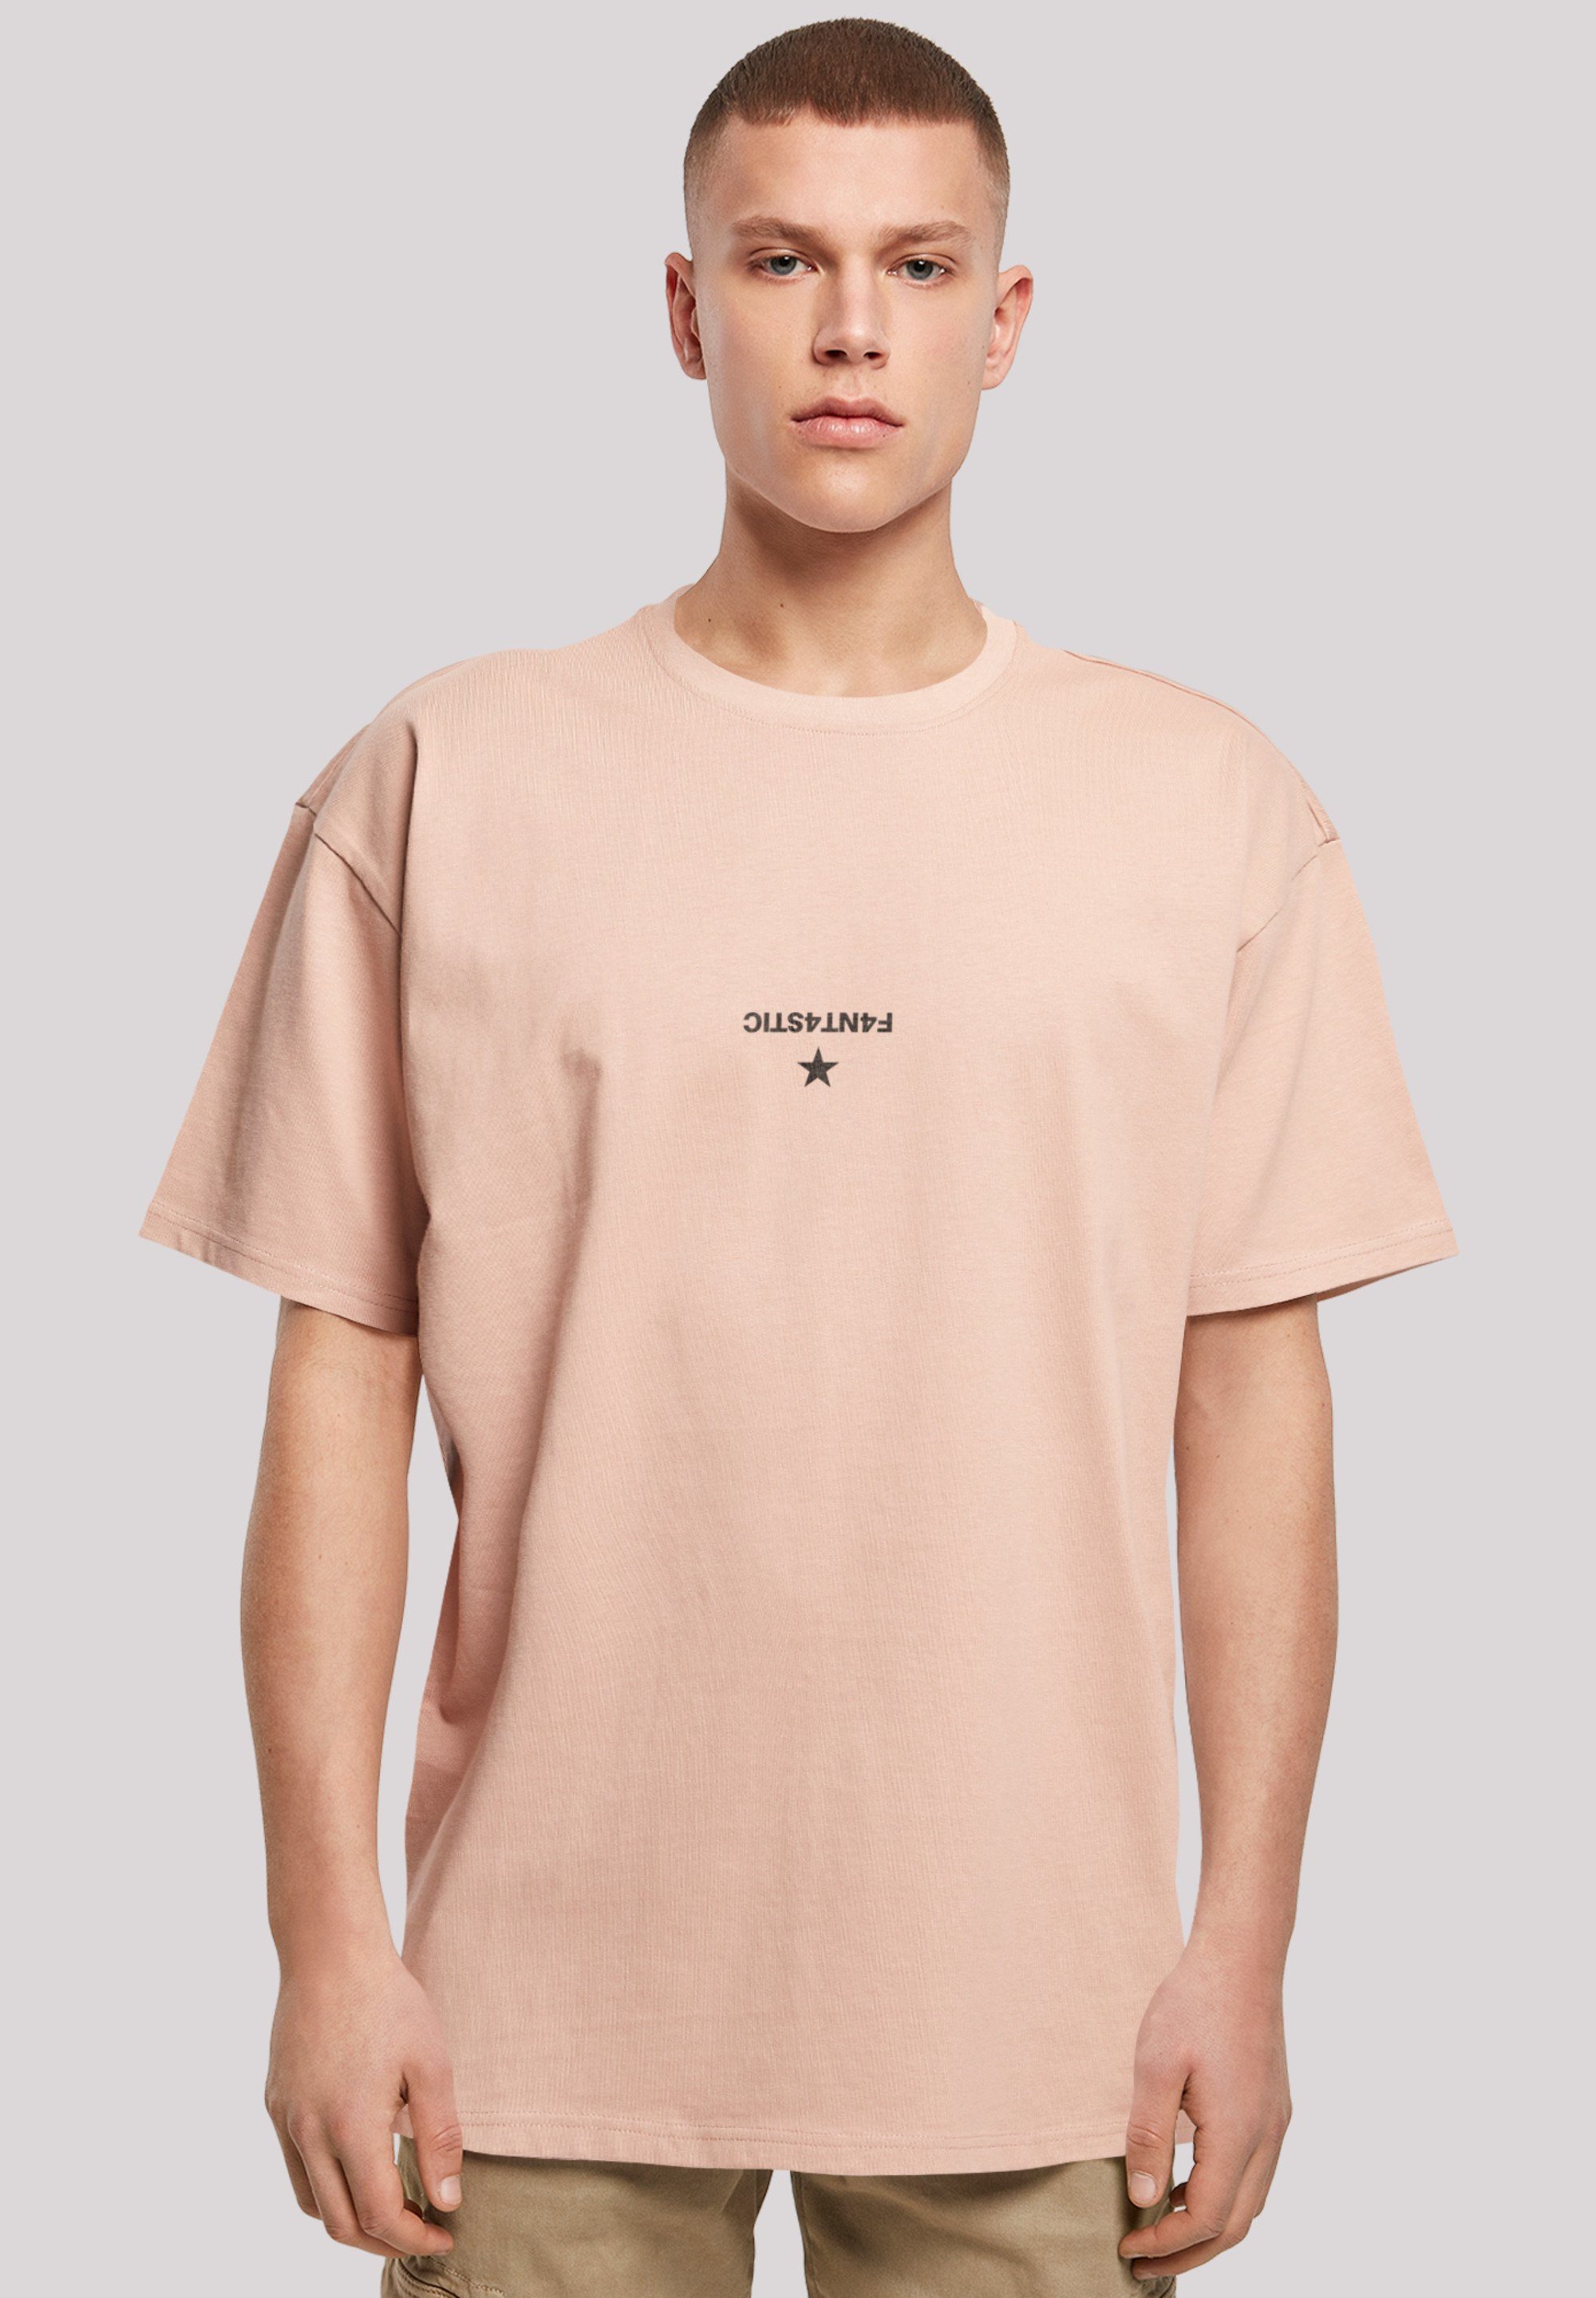 Abstract Print amber F4NT4STIC Geometric T-Shirt